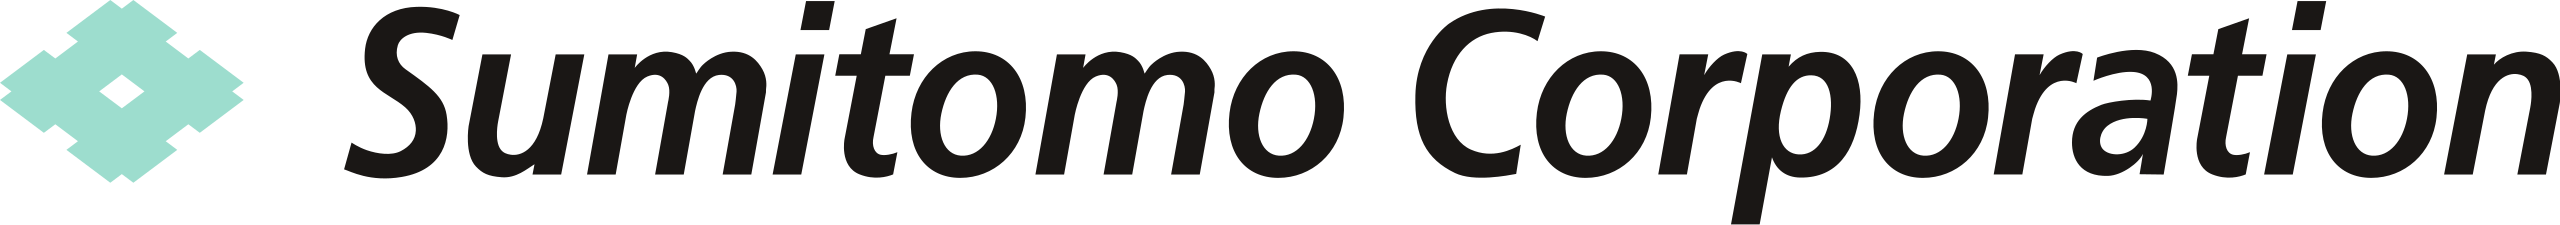 Sumitomo Group Logo Color